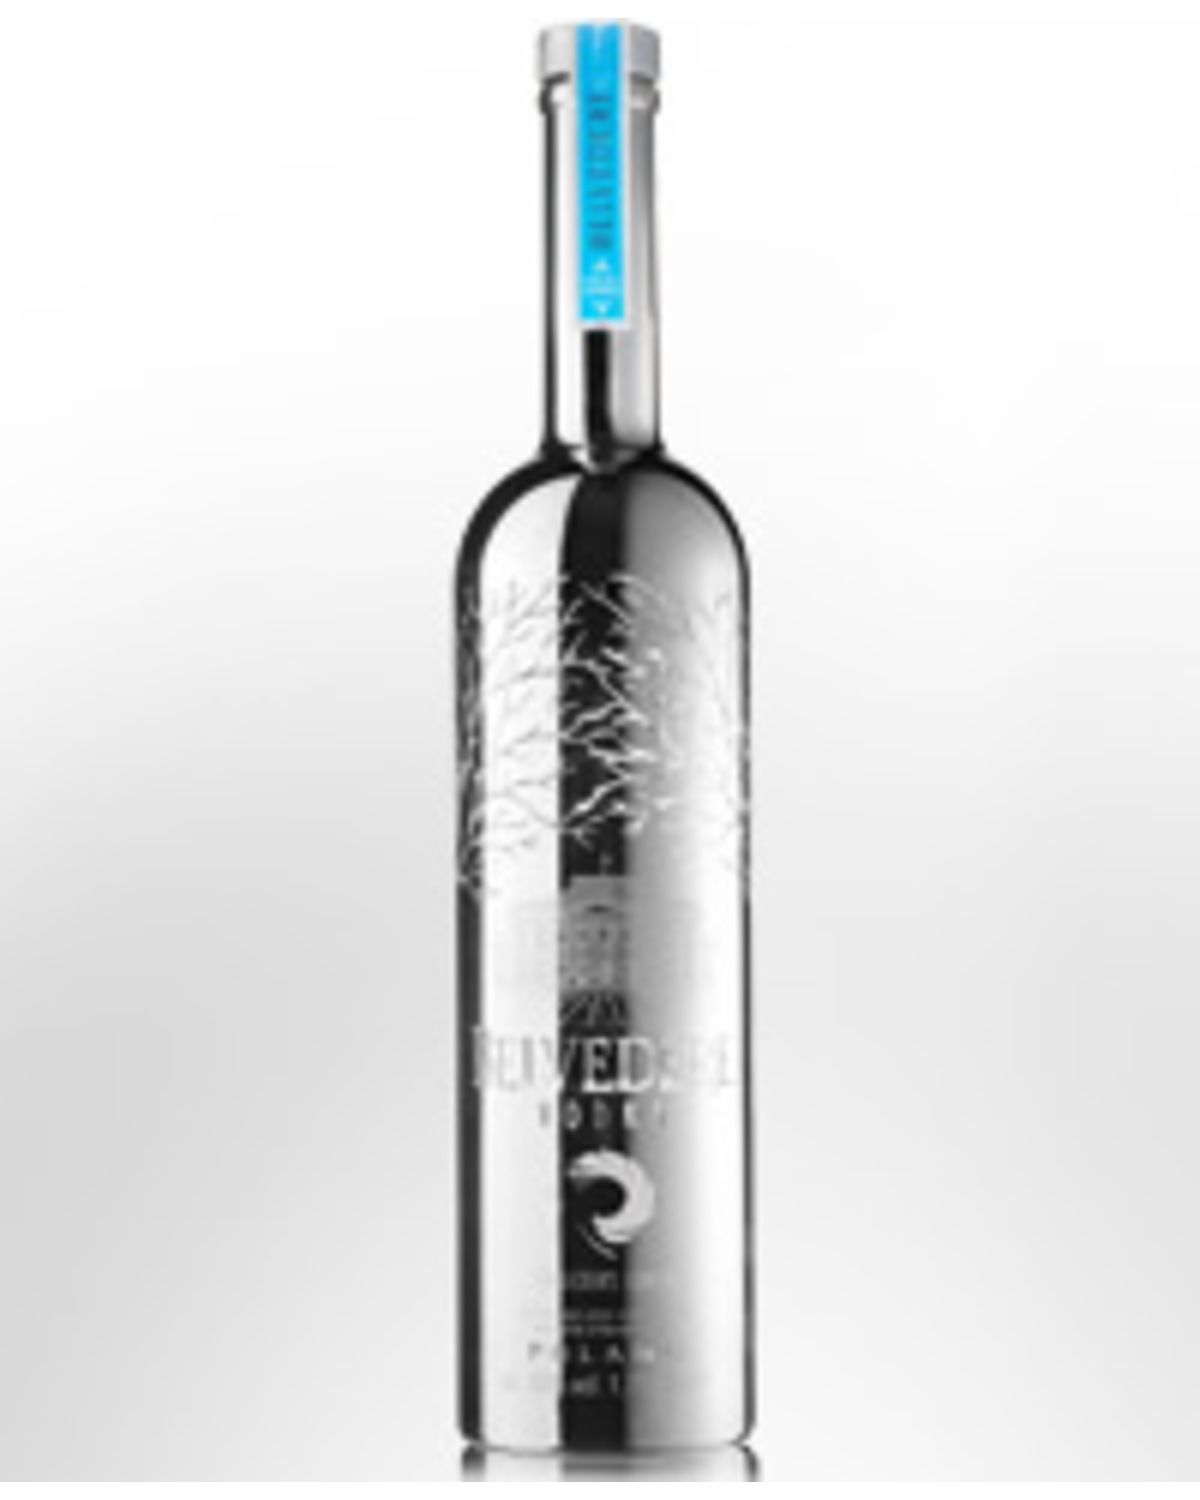 Belvedere Vodka Silver Bottle Limited Edition, Poland